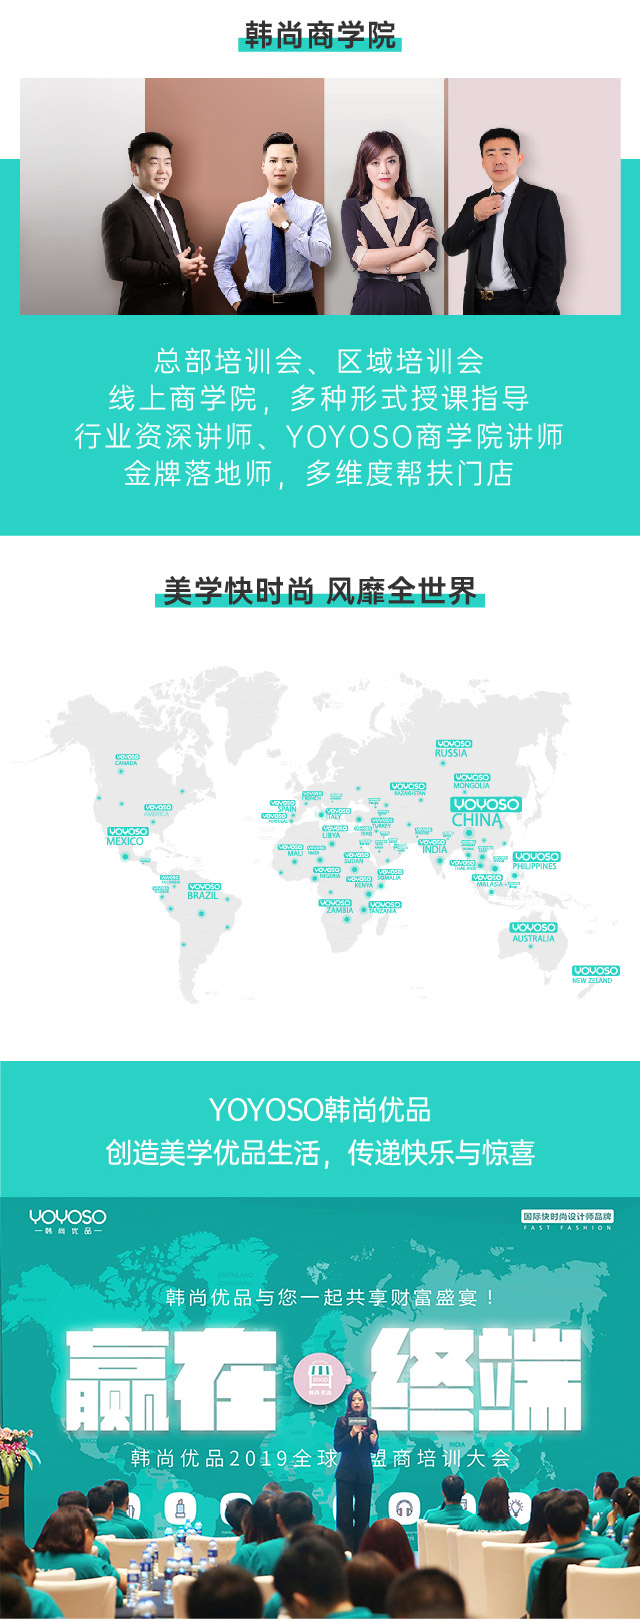 YOYOSO韩尚优品美学生活设计师品牌 融合美学与优品 美学快时尚 风靡全世界